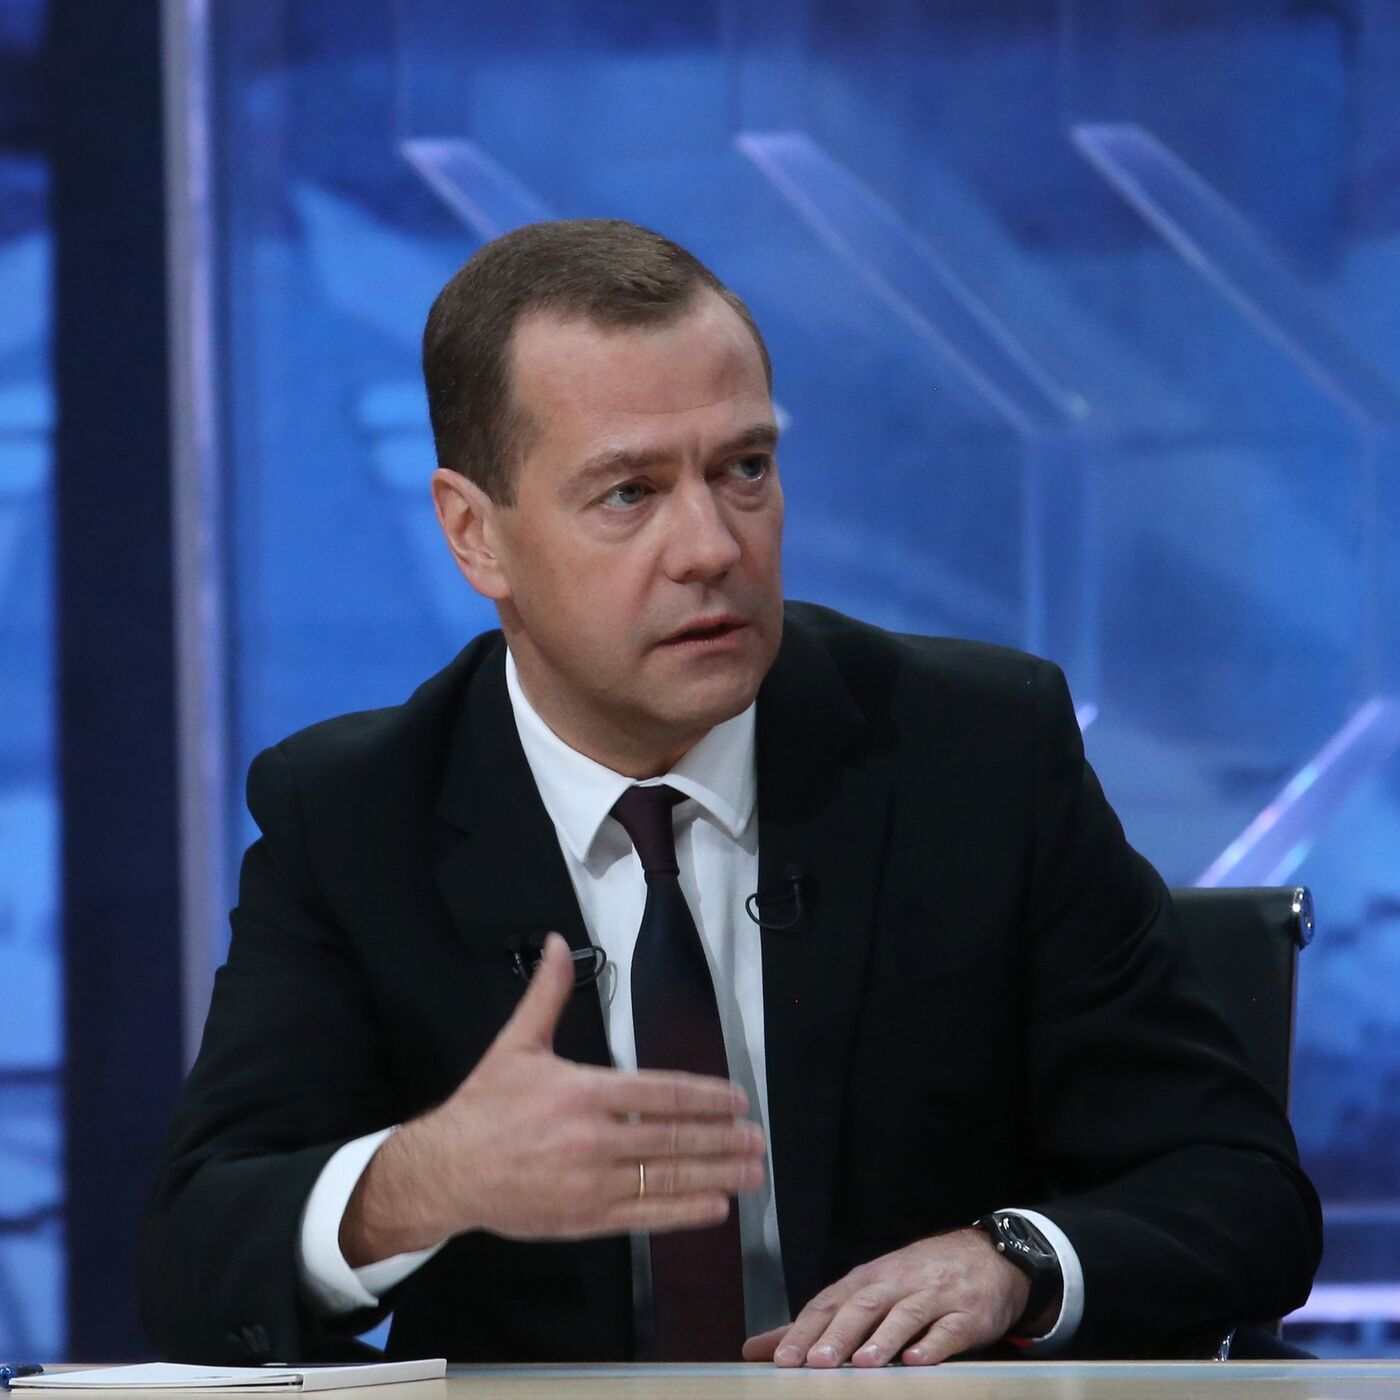 Биография Дмитрия Медведева: семья карьера президентство